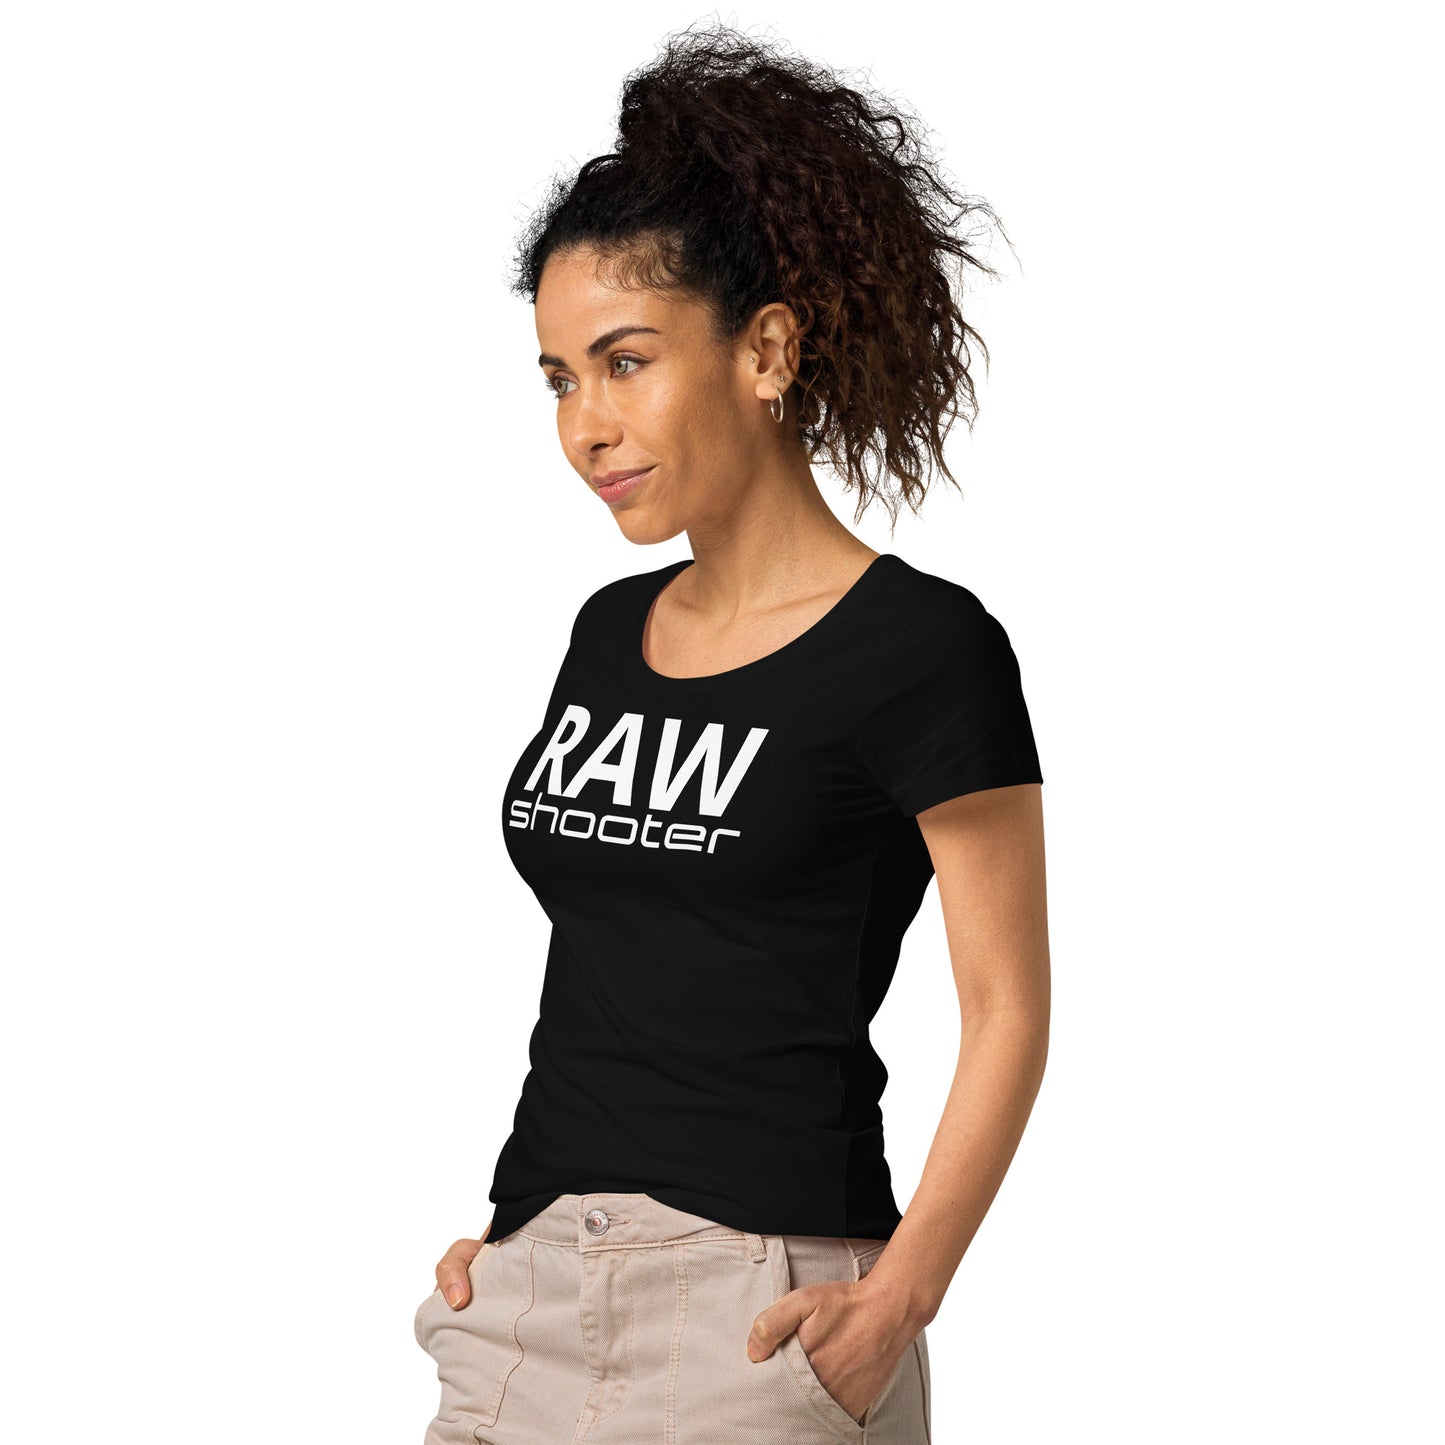 Camiseta básica orgánica mujer